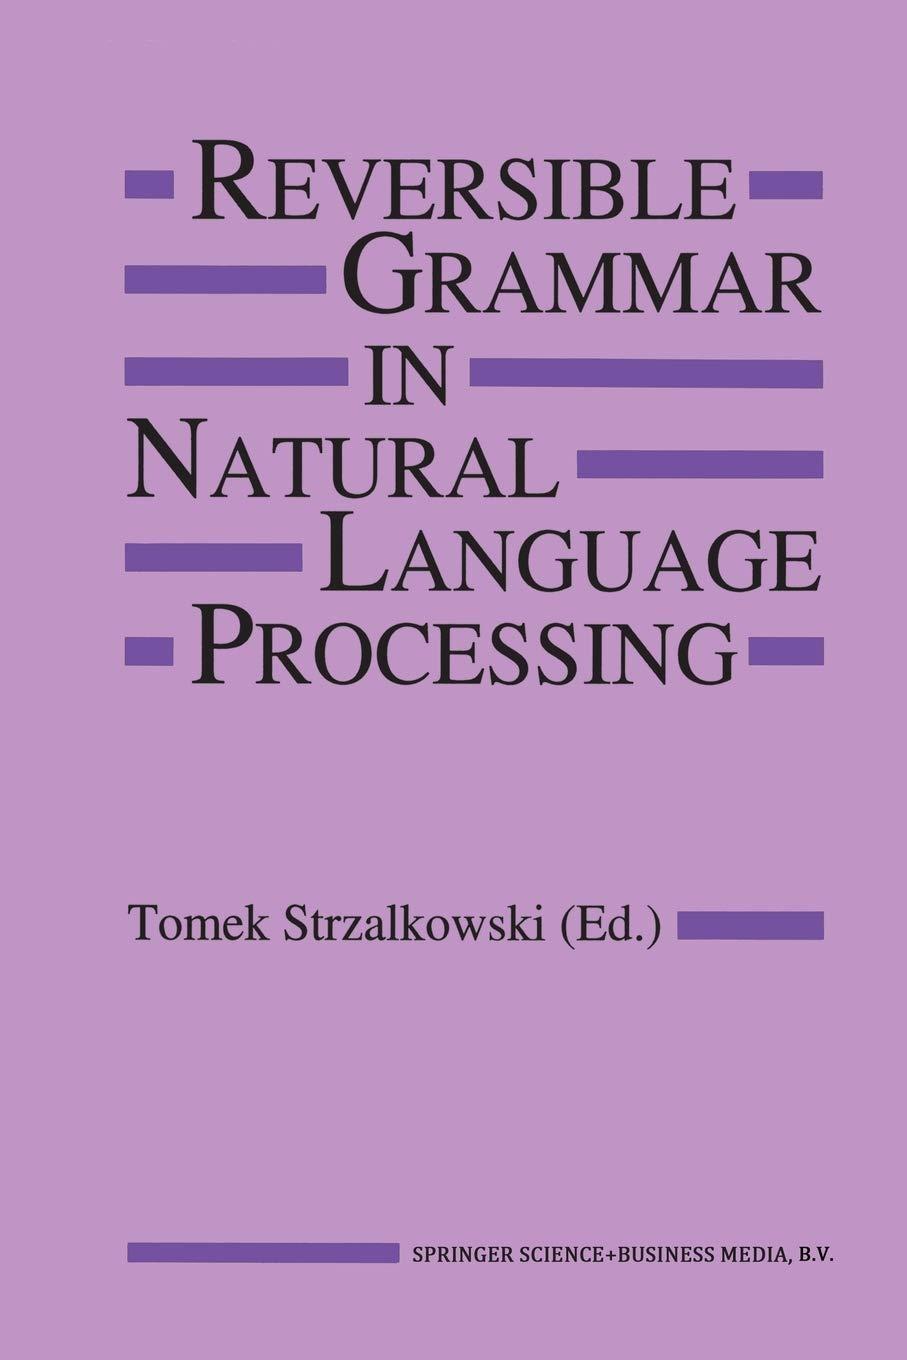 reversible grammar in natural language processing 1994 edition t. strzalkowski 1461361737, 978-1461361732